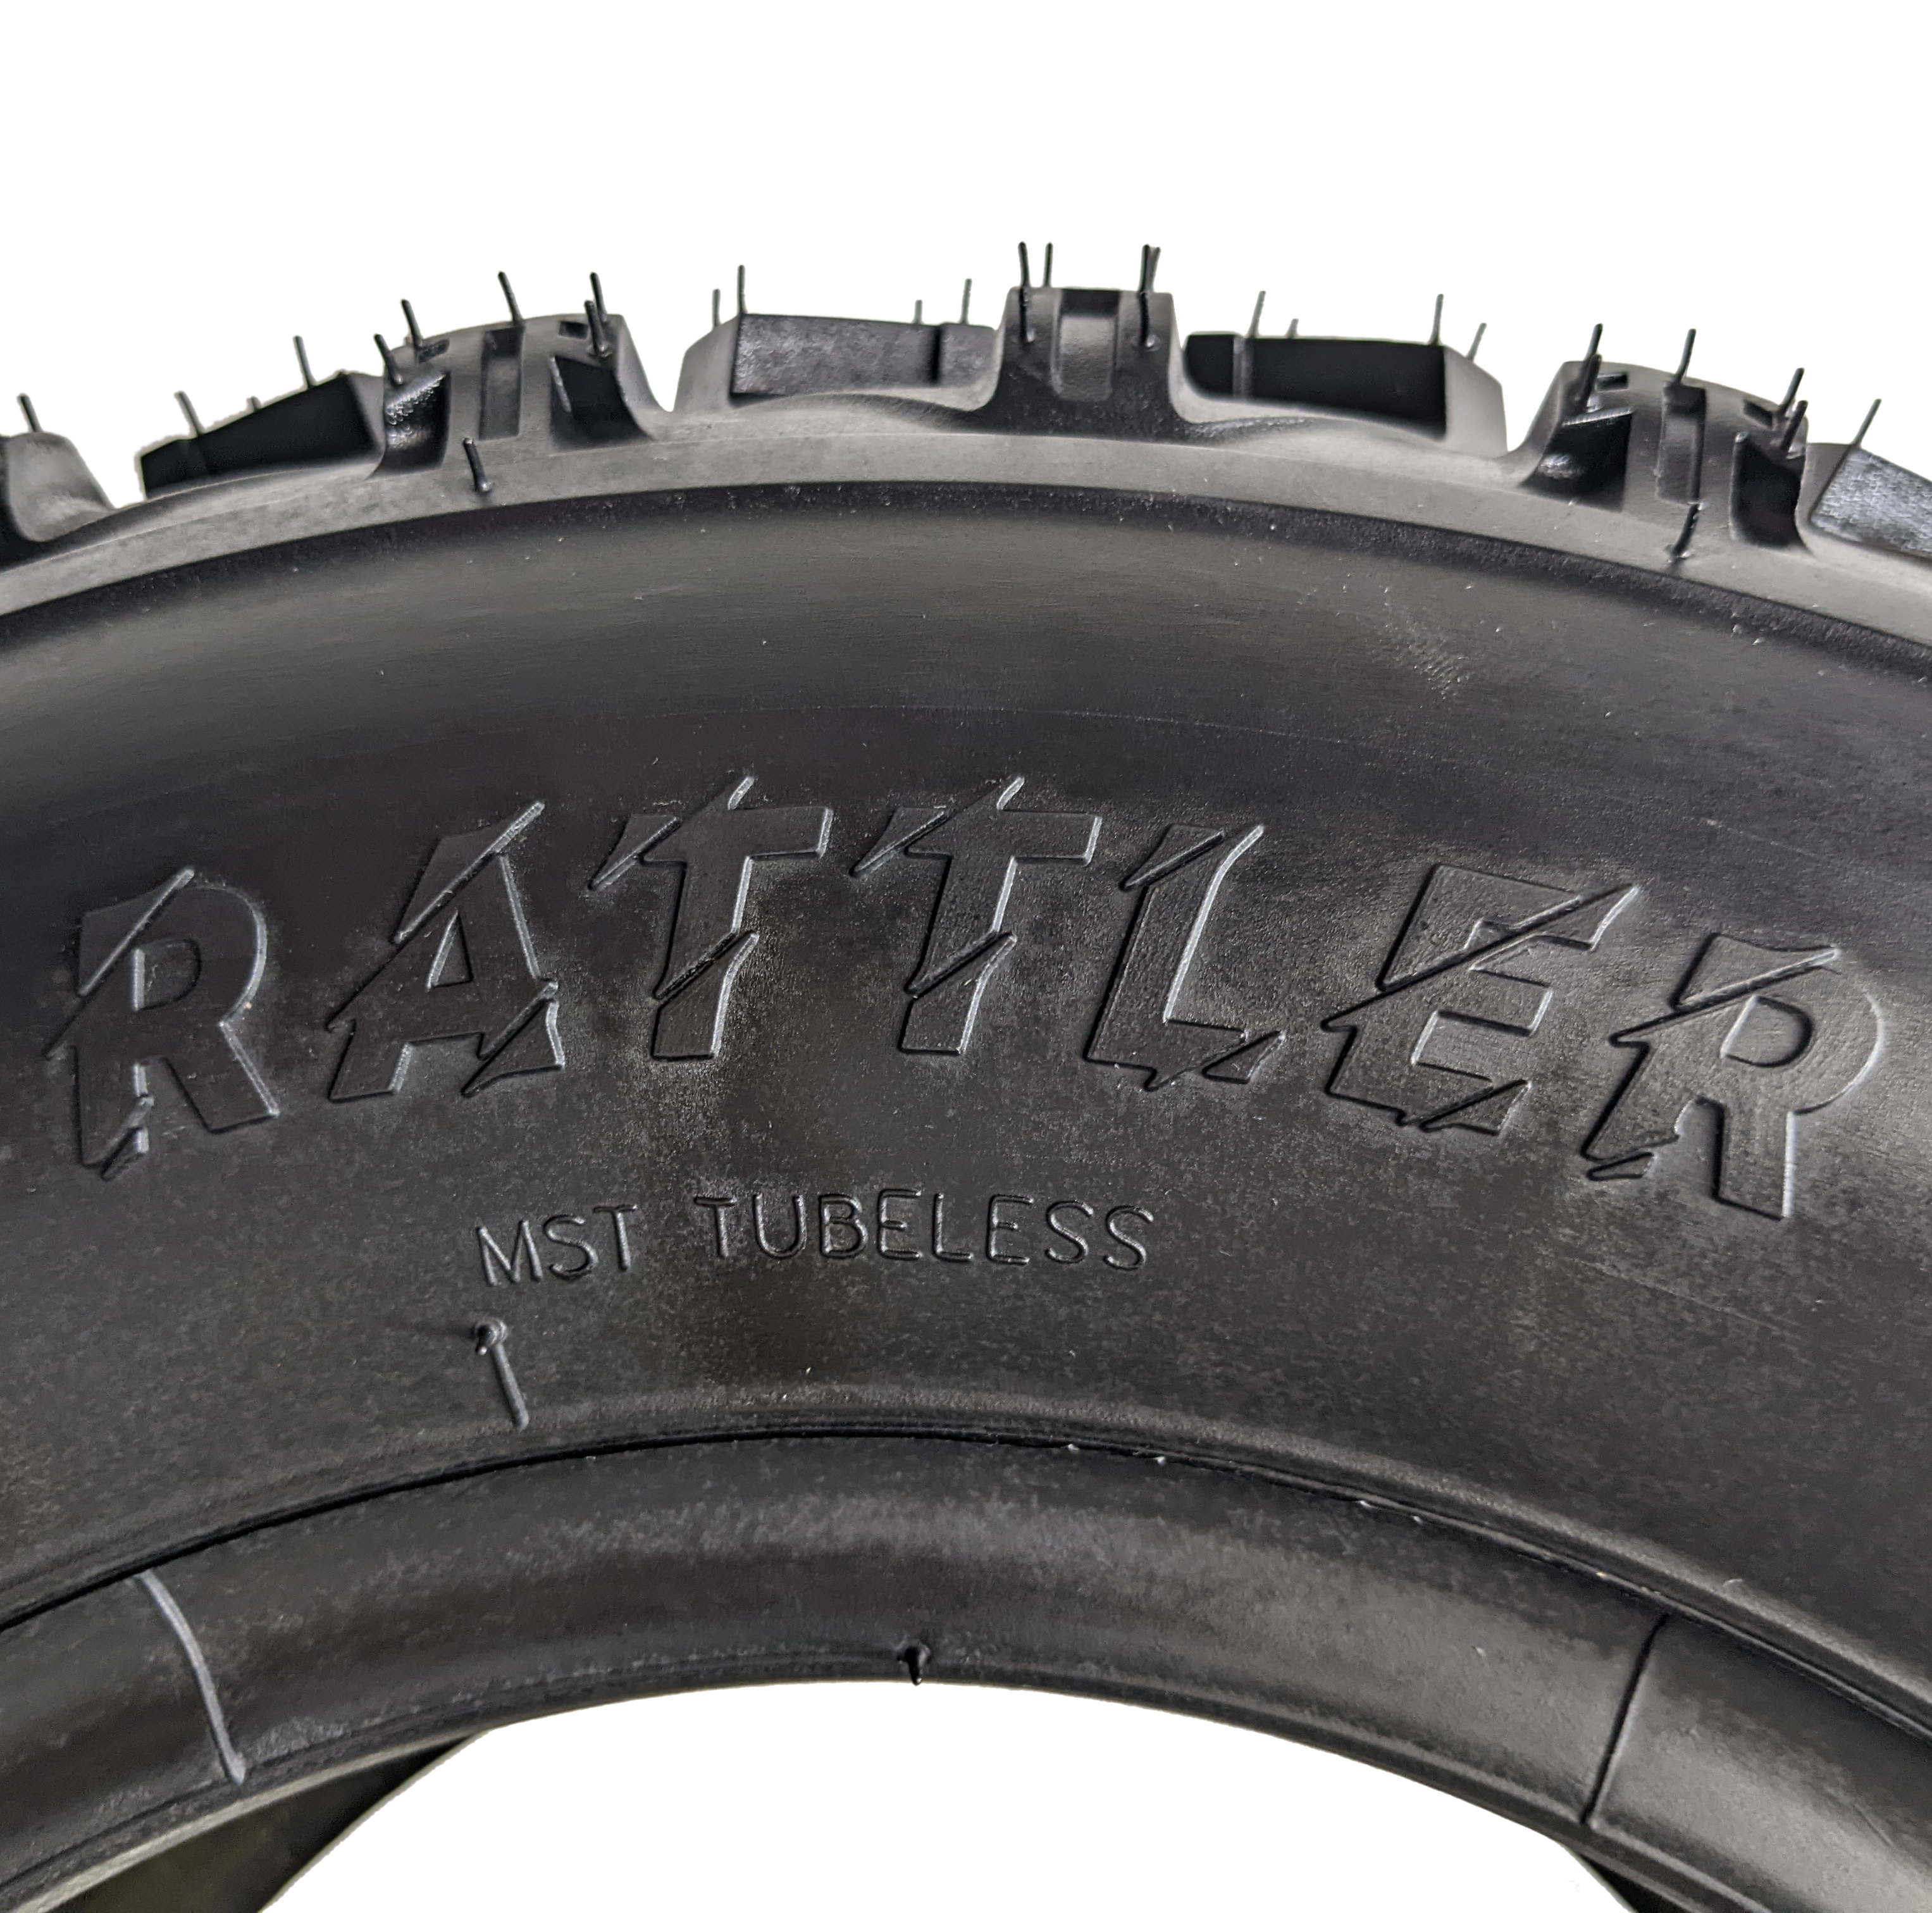 20x11-9 Moose Rattler Rear ATV Tire - Click Image to Close